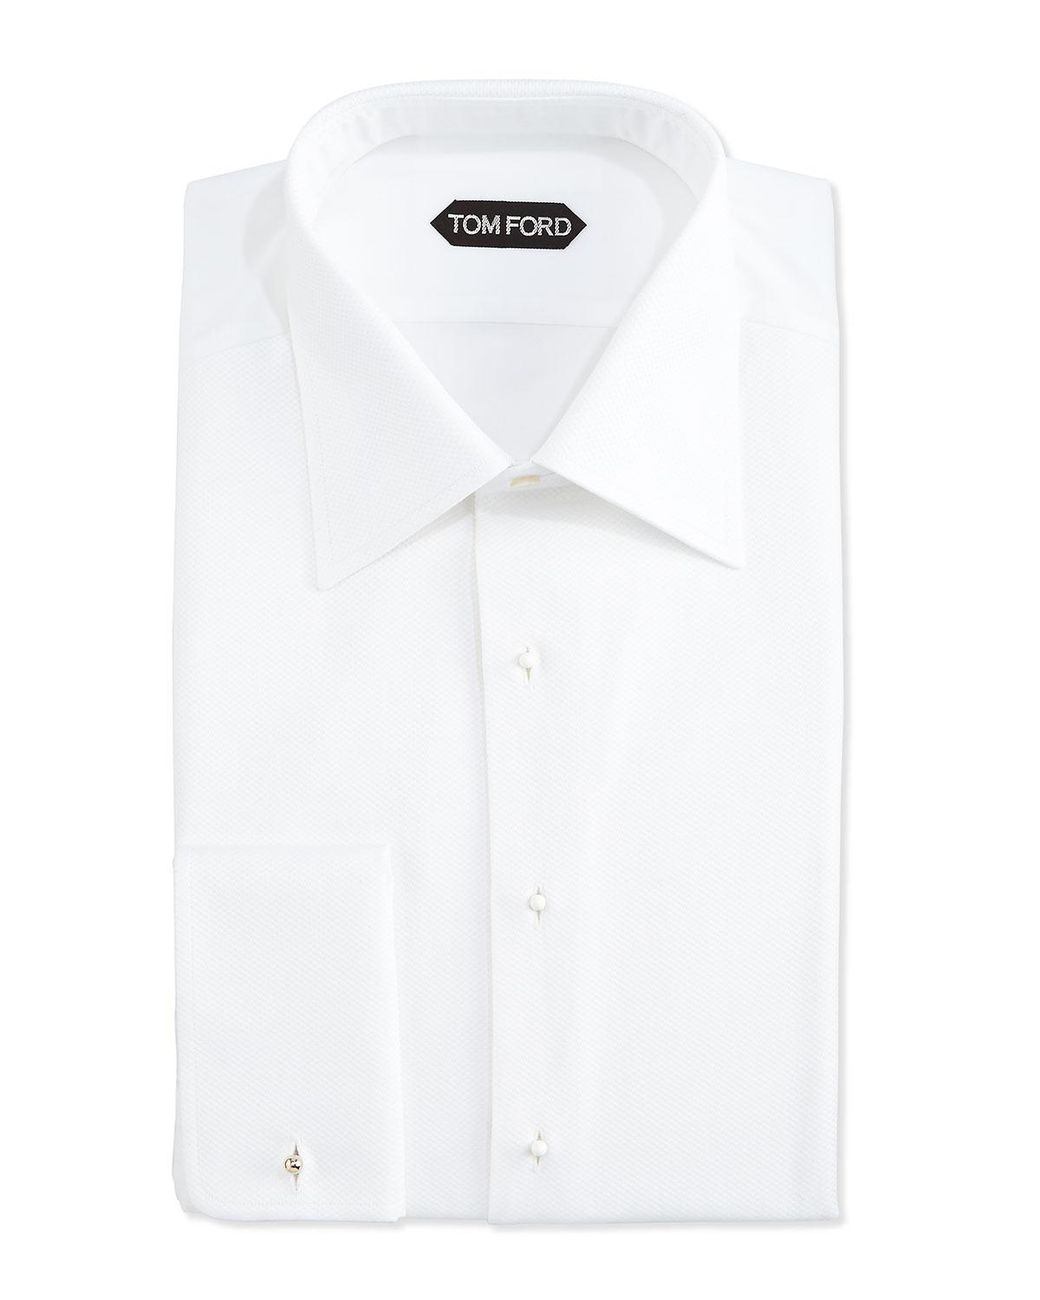 Lyst - Tom Ford Pique Woven Tuxedo Shirt in White for Men - Save 45.0%